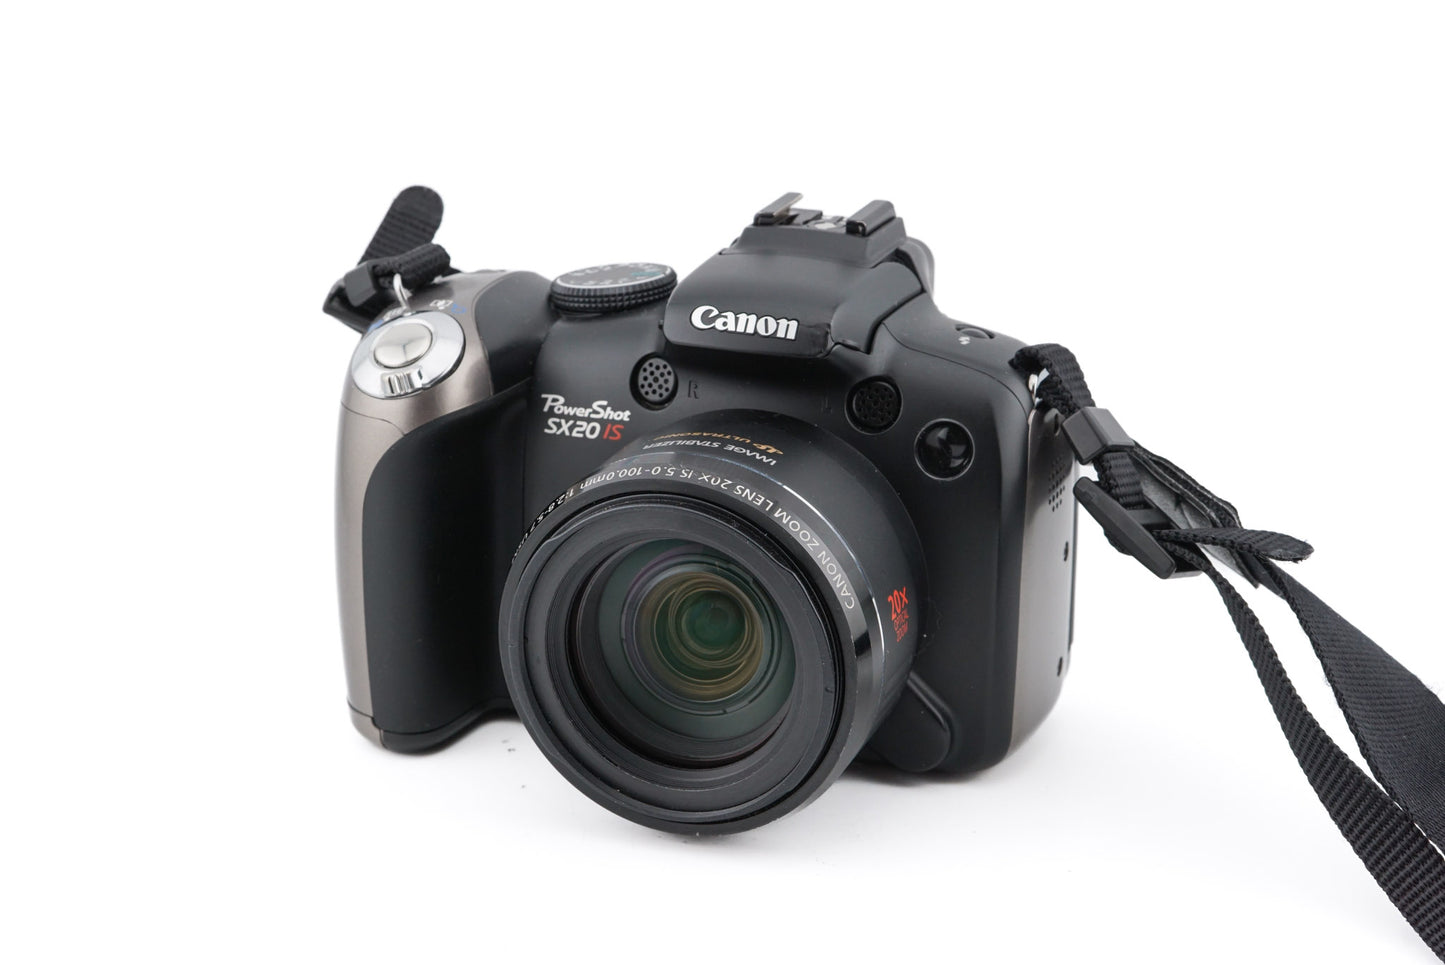 Canon PowerShot SX20 IS - Camera